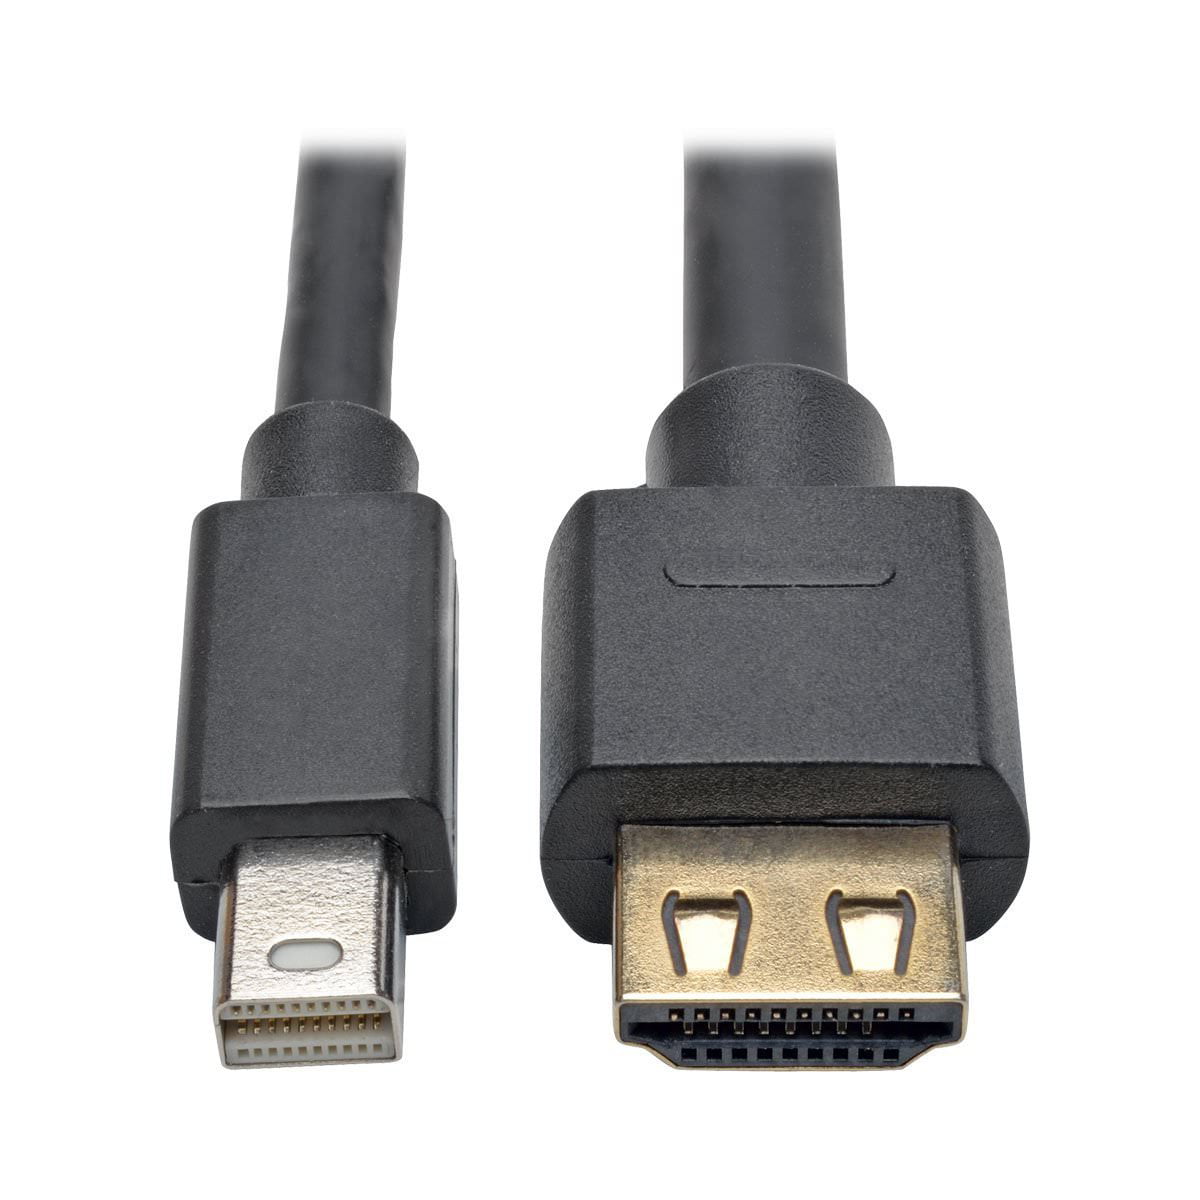 Plugable Mini DisplayPort/Thunderbolt™ 2 to HDMI 2.0 Active Adapter –  Plugable Technologies